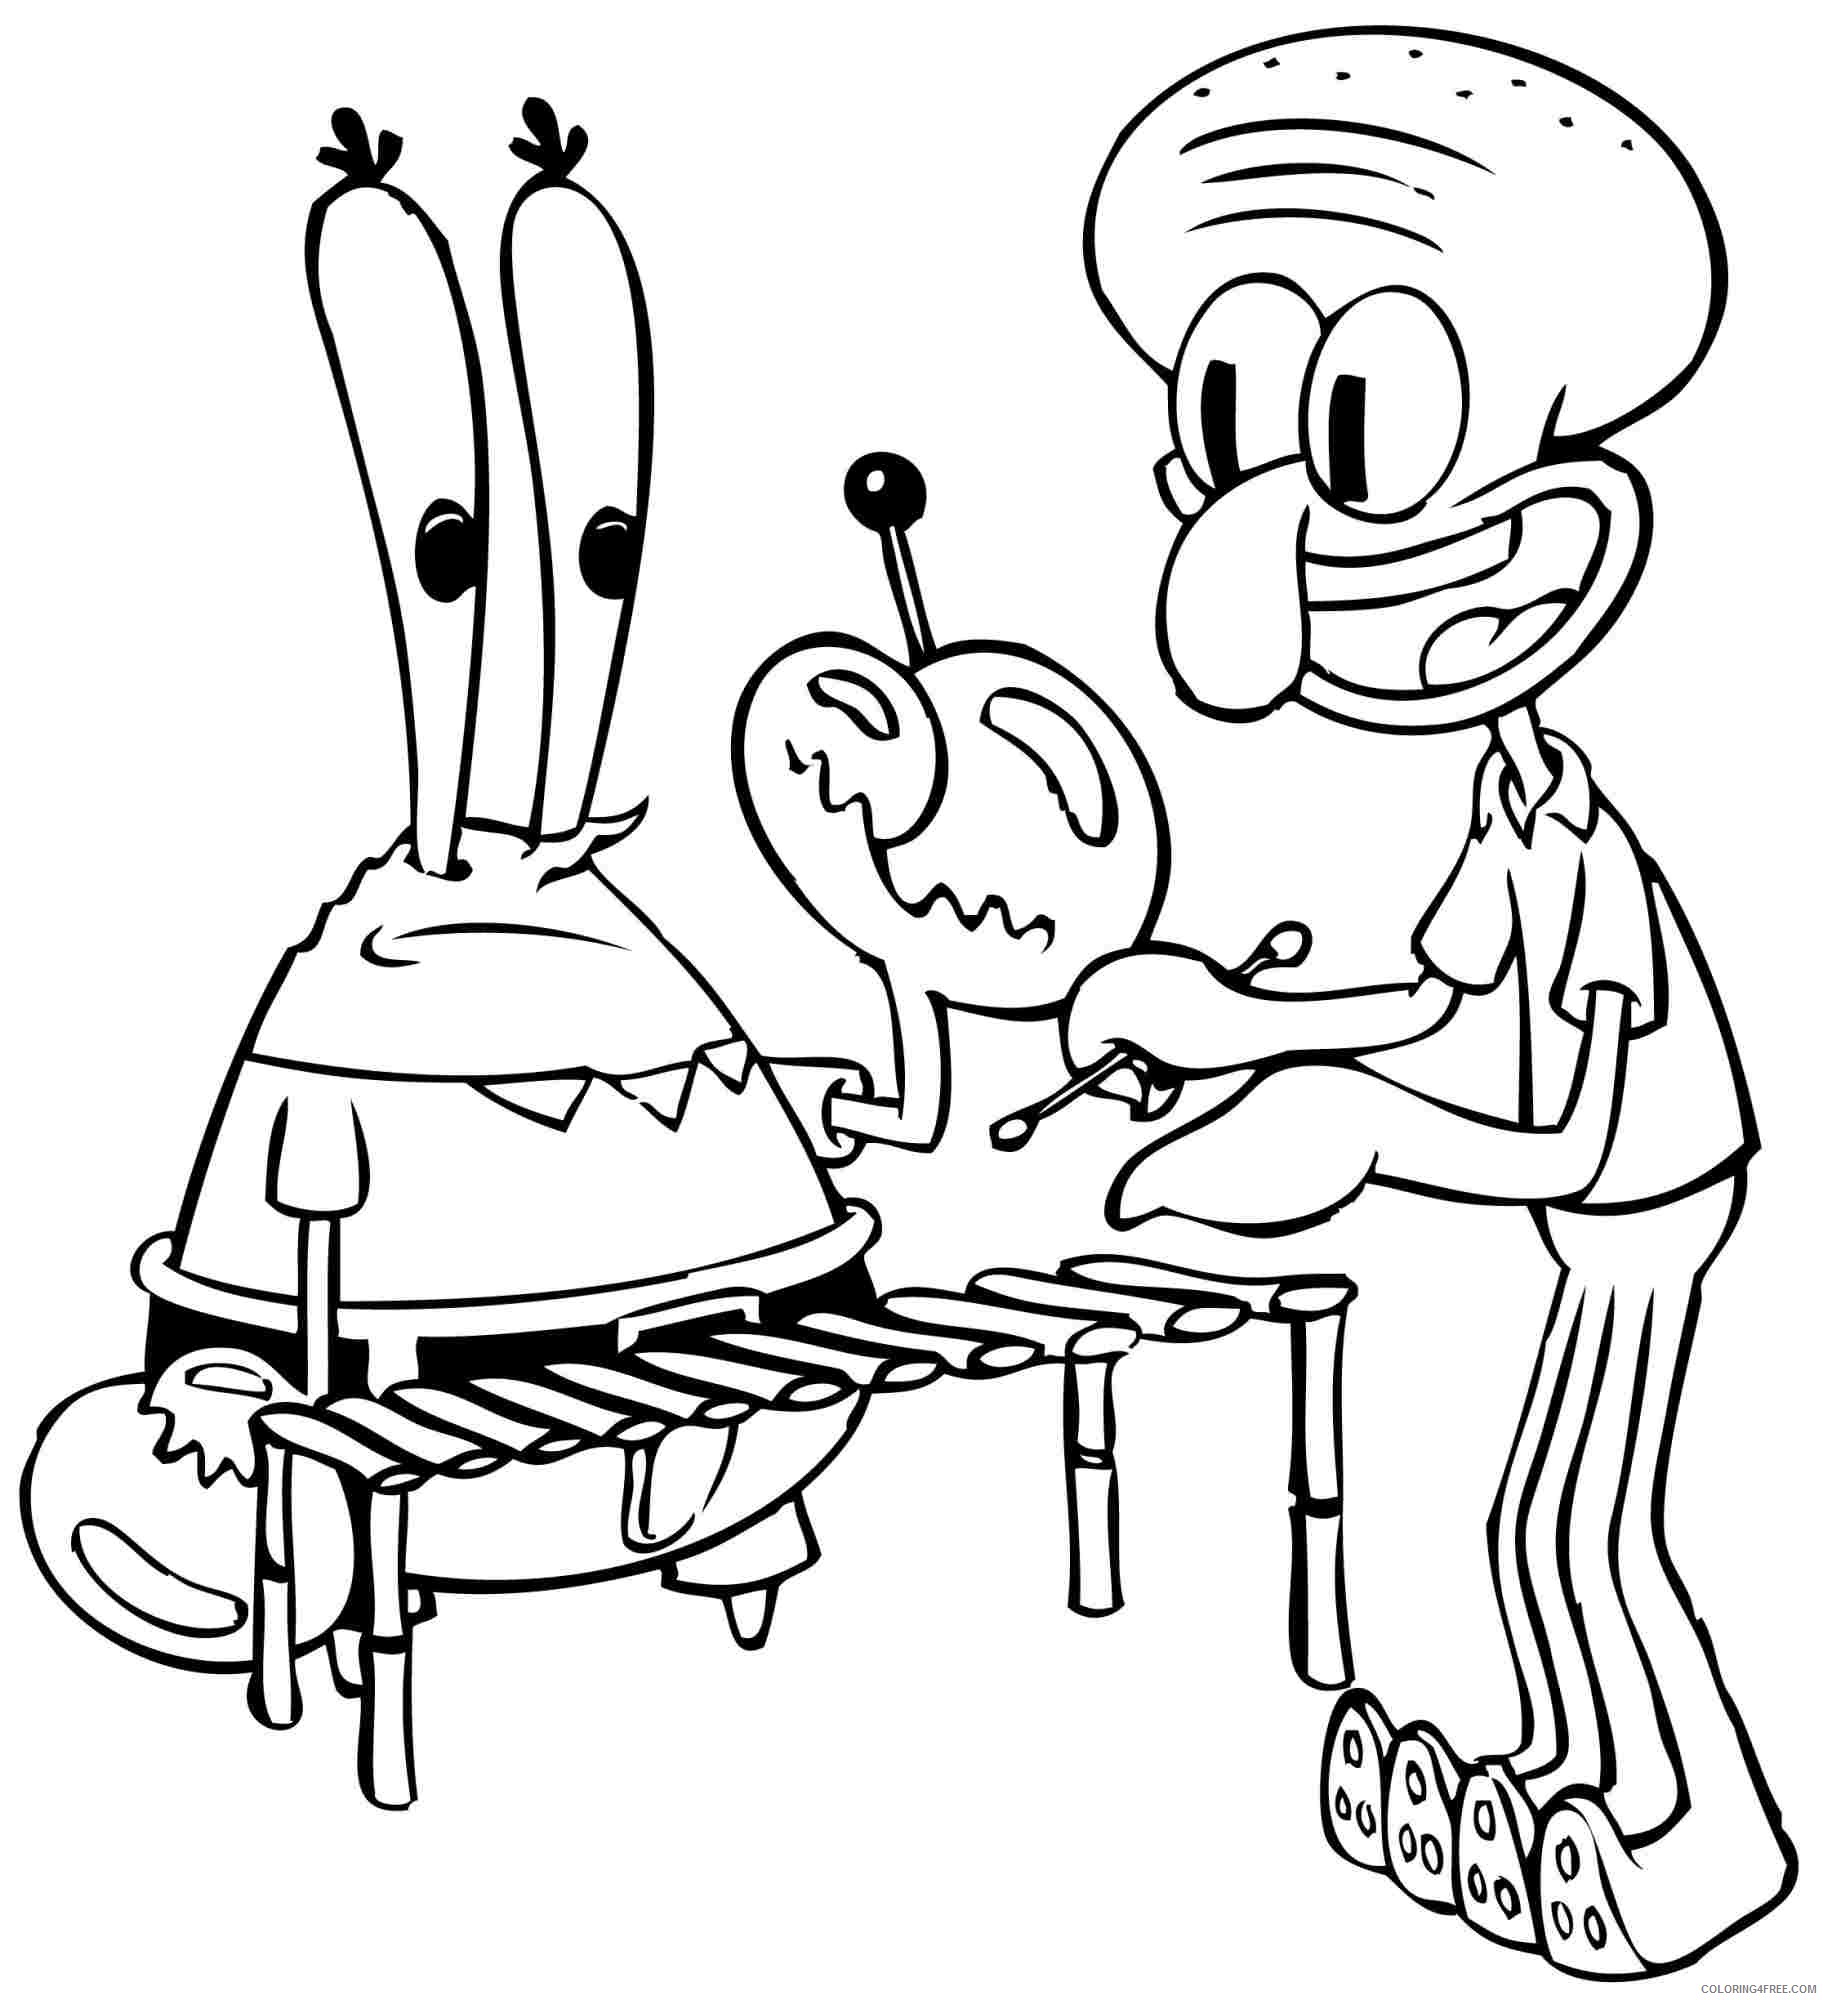 spongebob squarepants coloring pages mr krabs and squidward Coloring4free